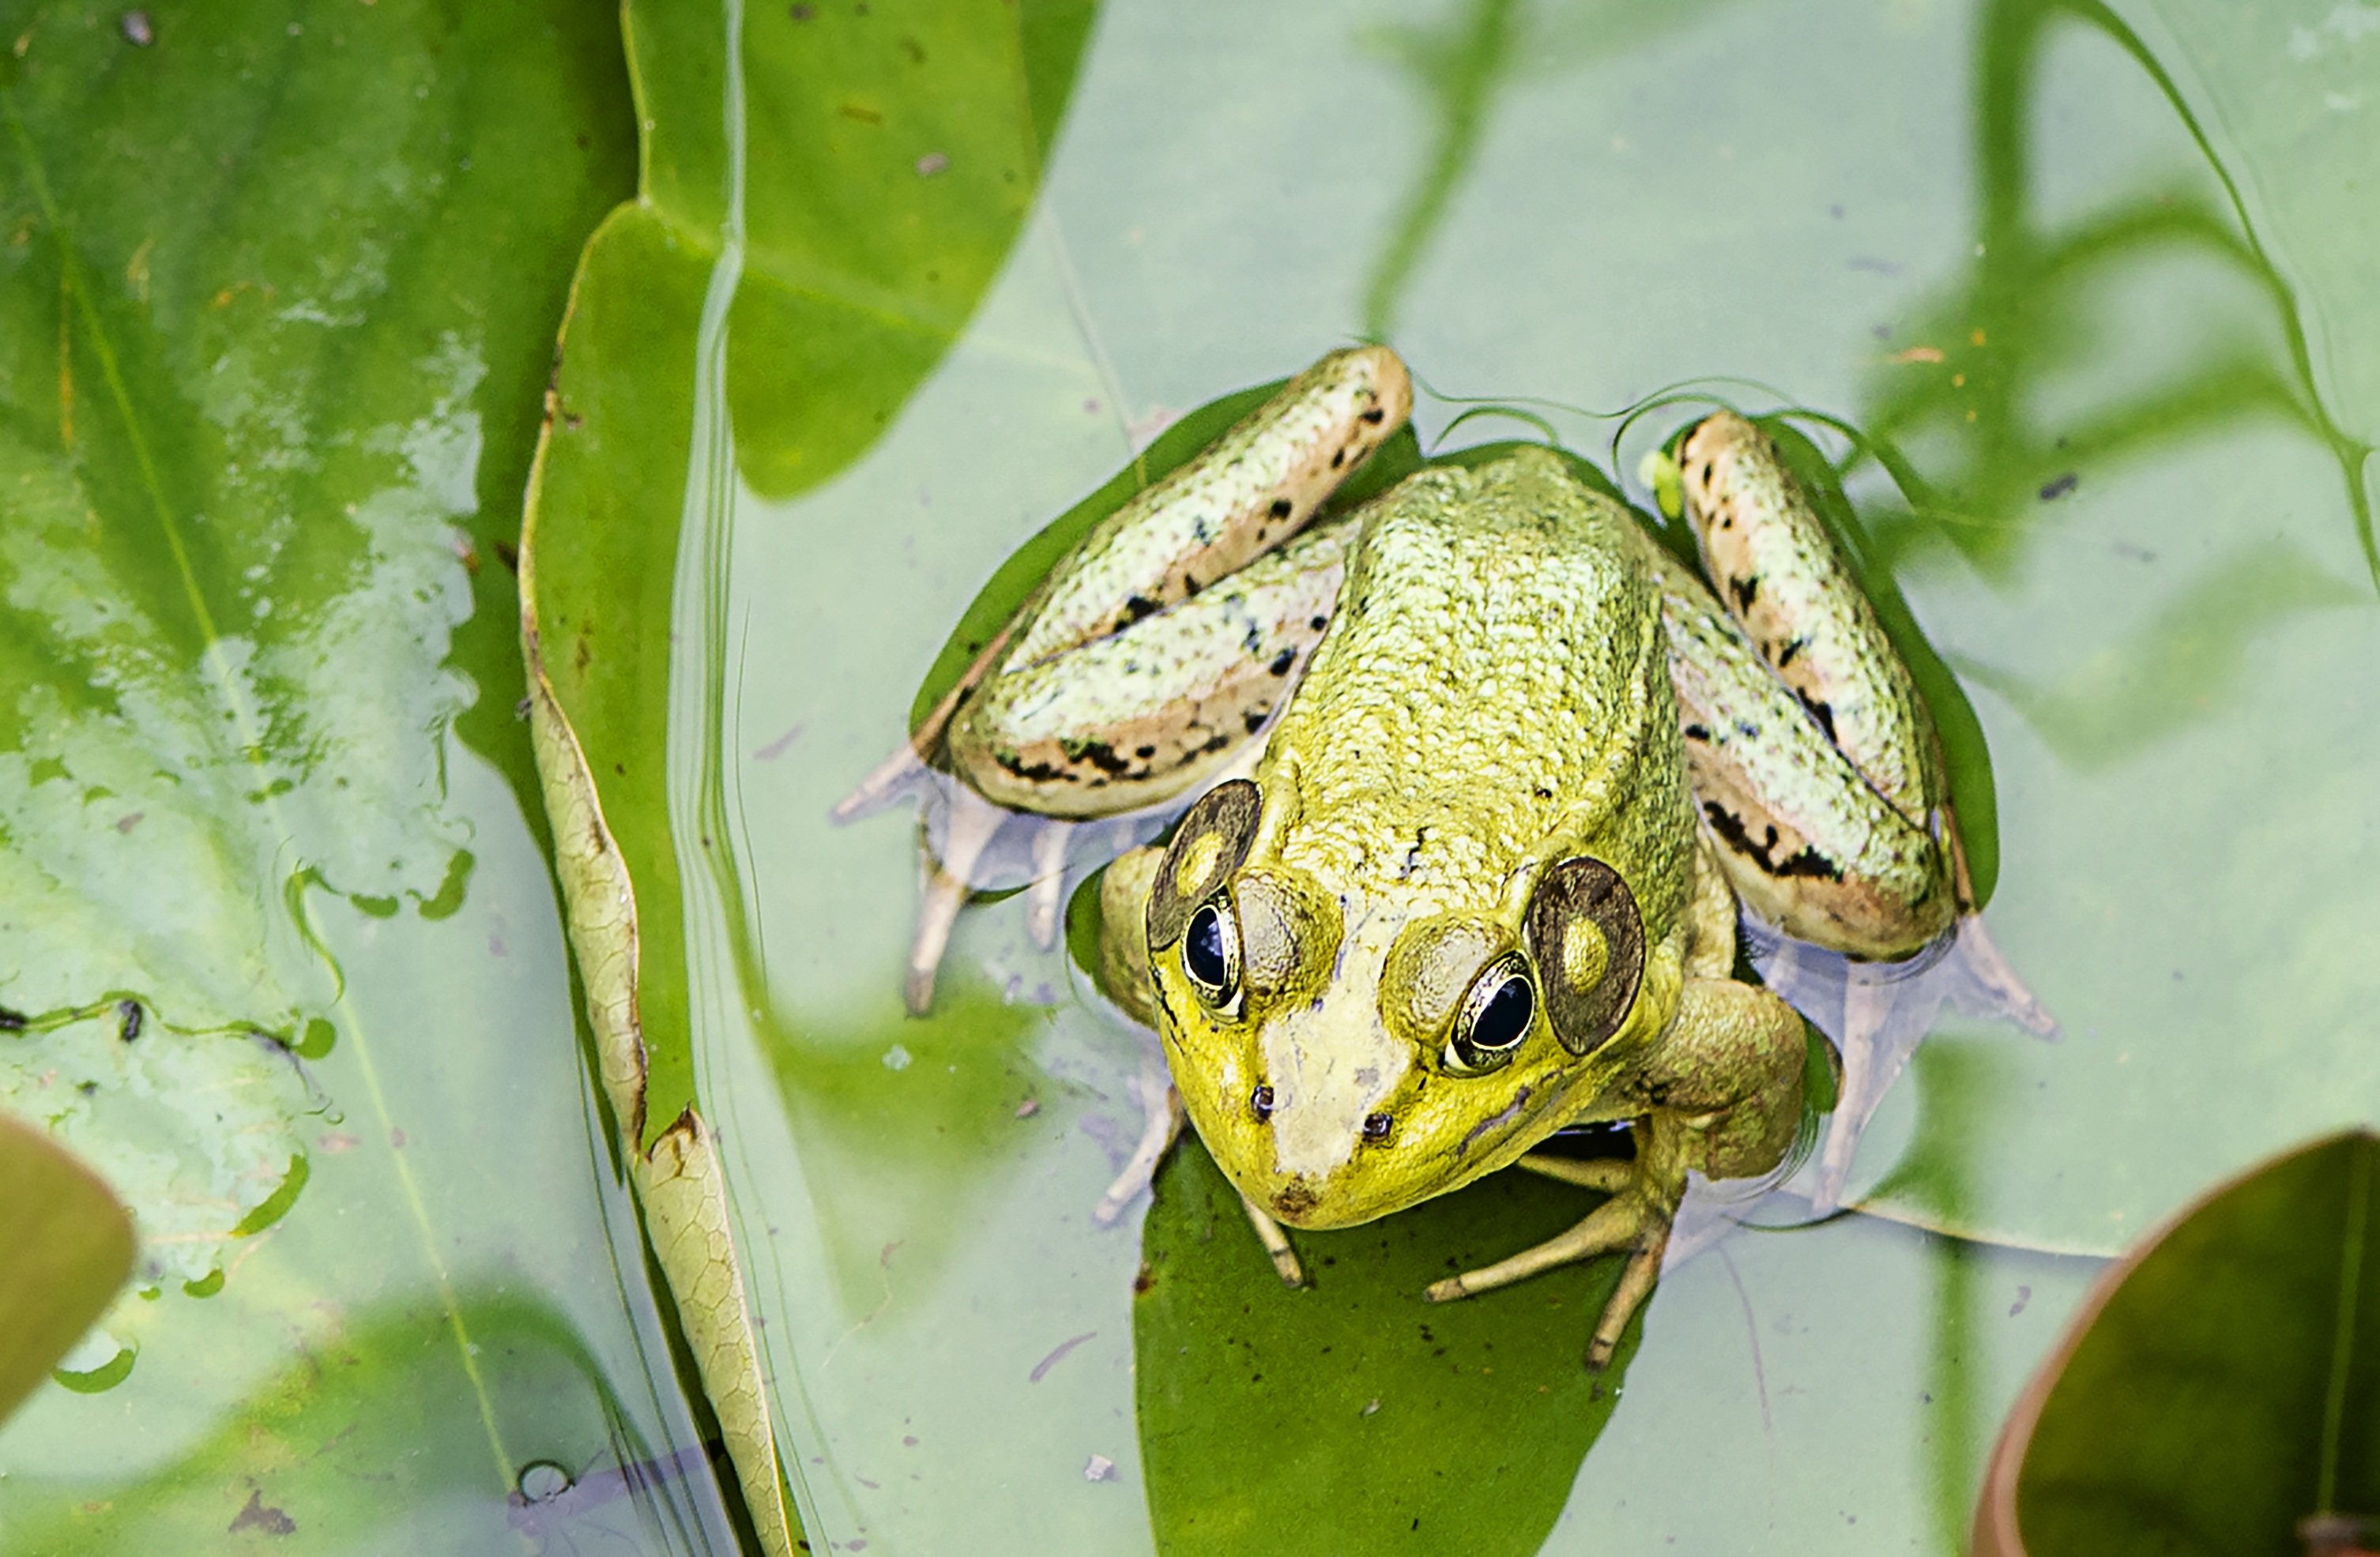 Zastaki.com - Зеленая лягушка сидит на листе в воде